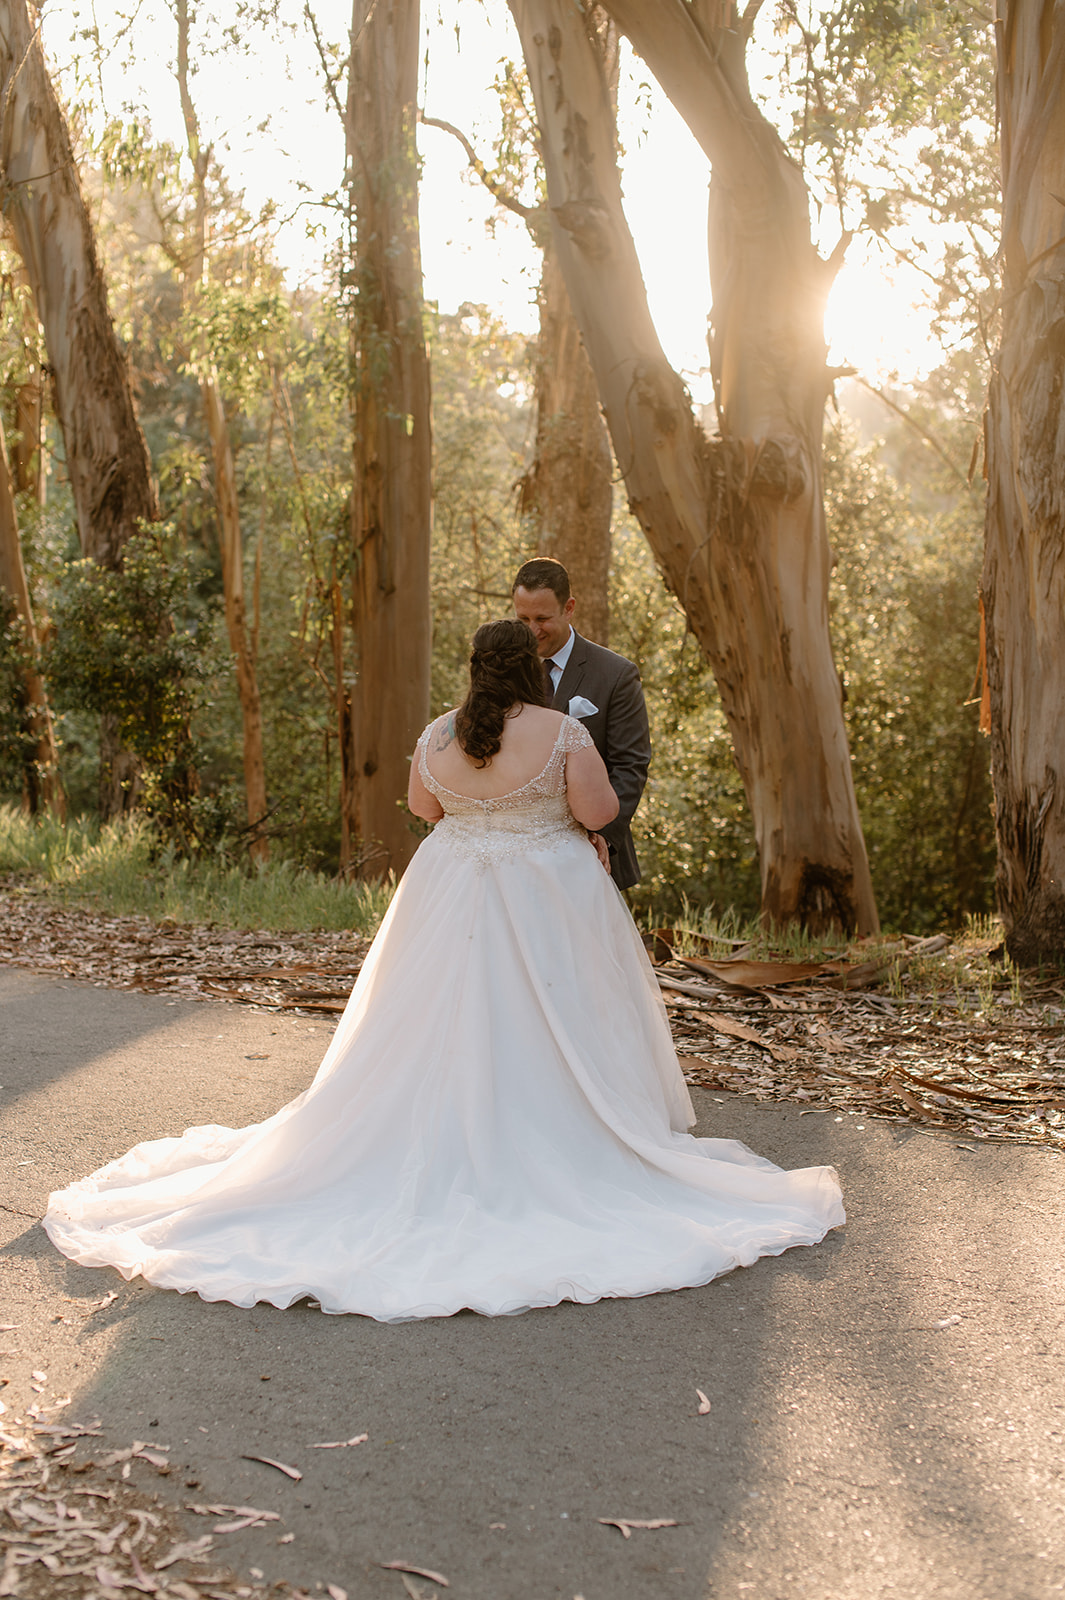 Sydney Jai Wedding Photographer - Bride and groom photos, Berkeley California wedding, golden hour wedding photos